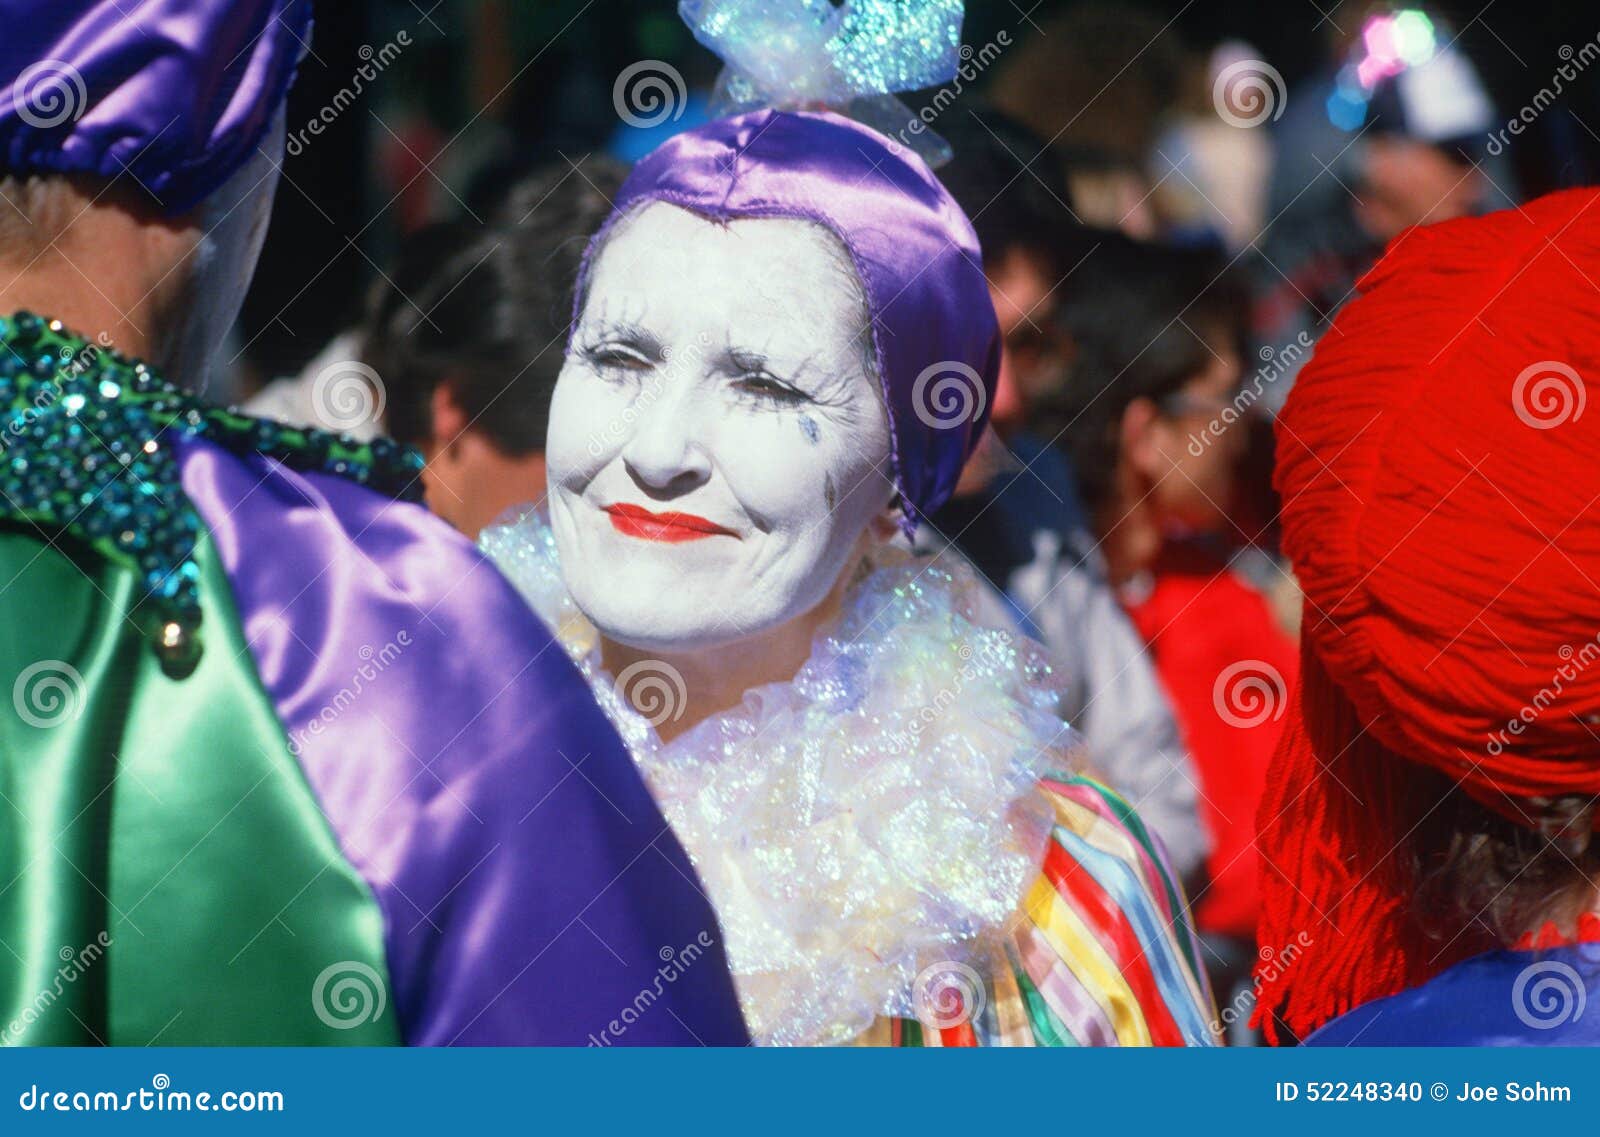 Harlequin at Mardi Gras Festival, New Orleans Editorial Image - Image ...